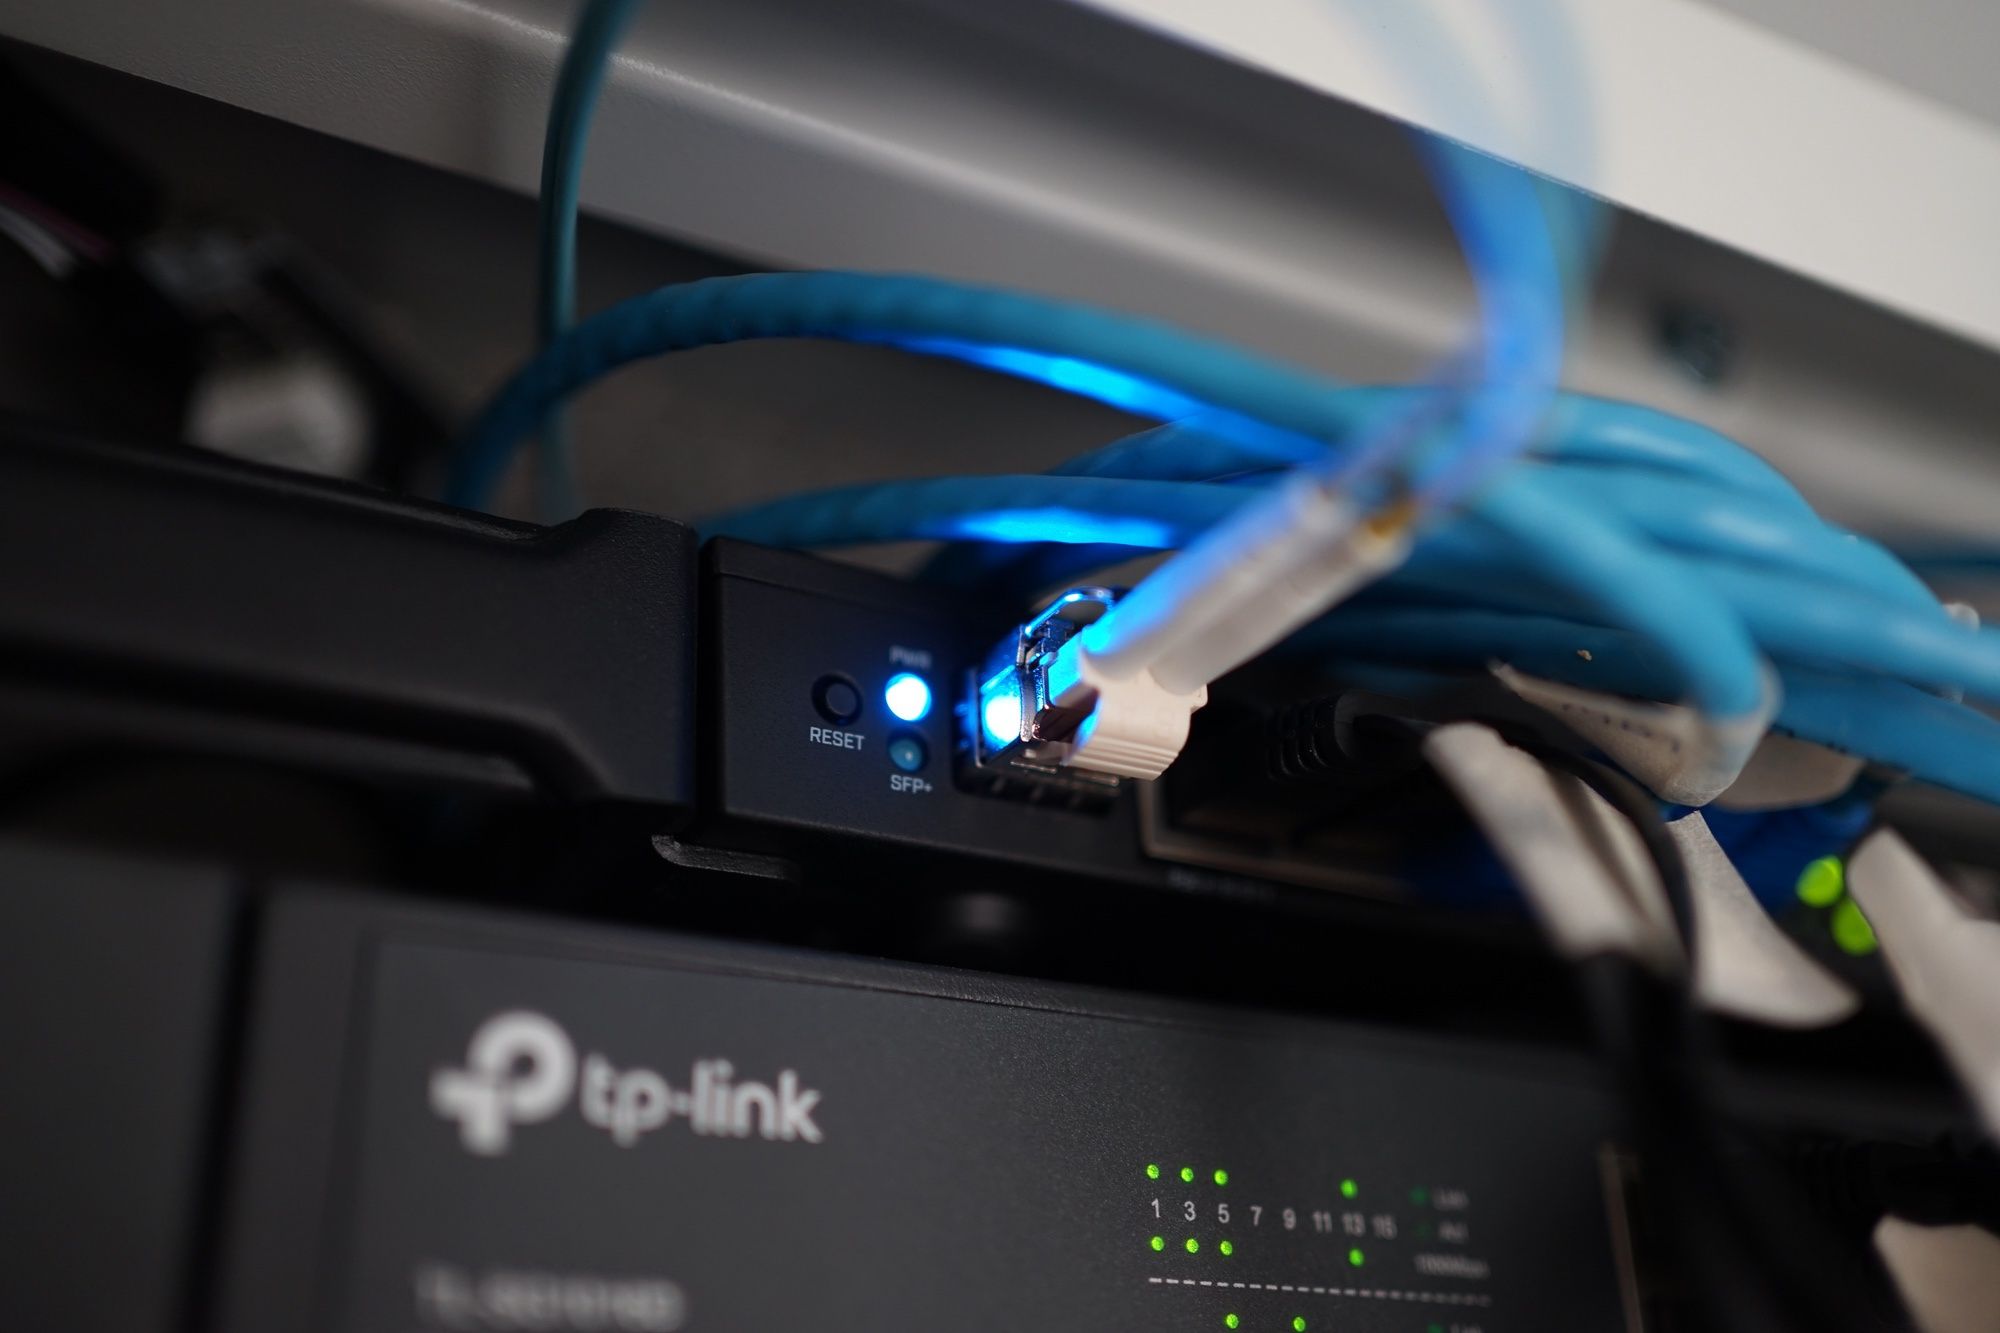 Network Upgrade (อีกแล้ว) เดิน Fibre Optics กับมี 10G Link แล้วจ้าาาาา